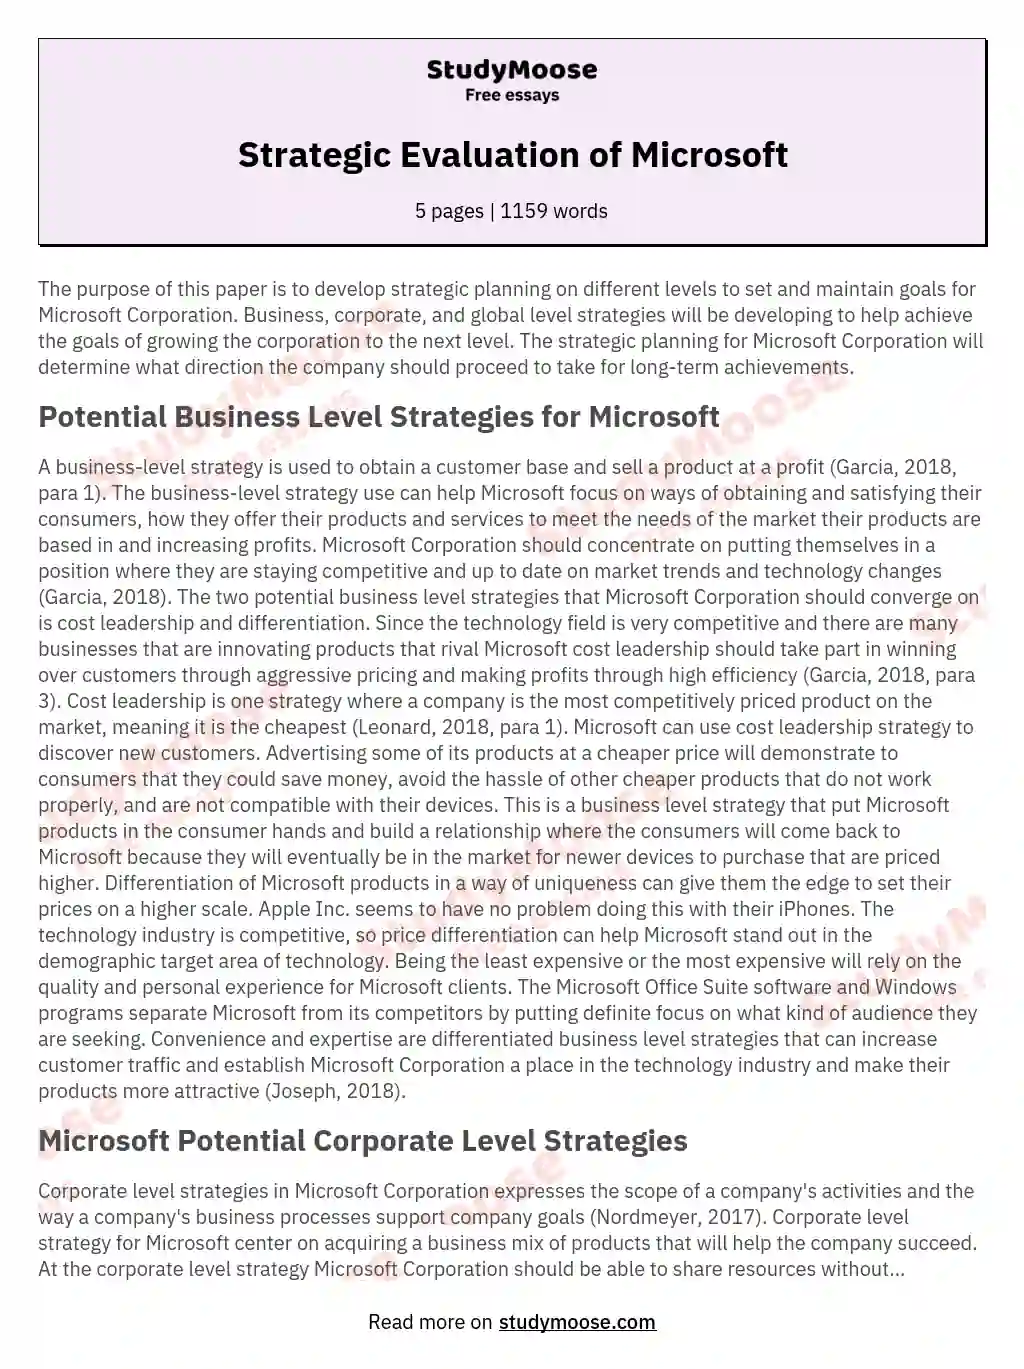 Strategic Evaluation of Microsoft essay